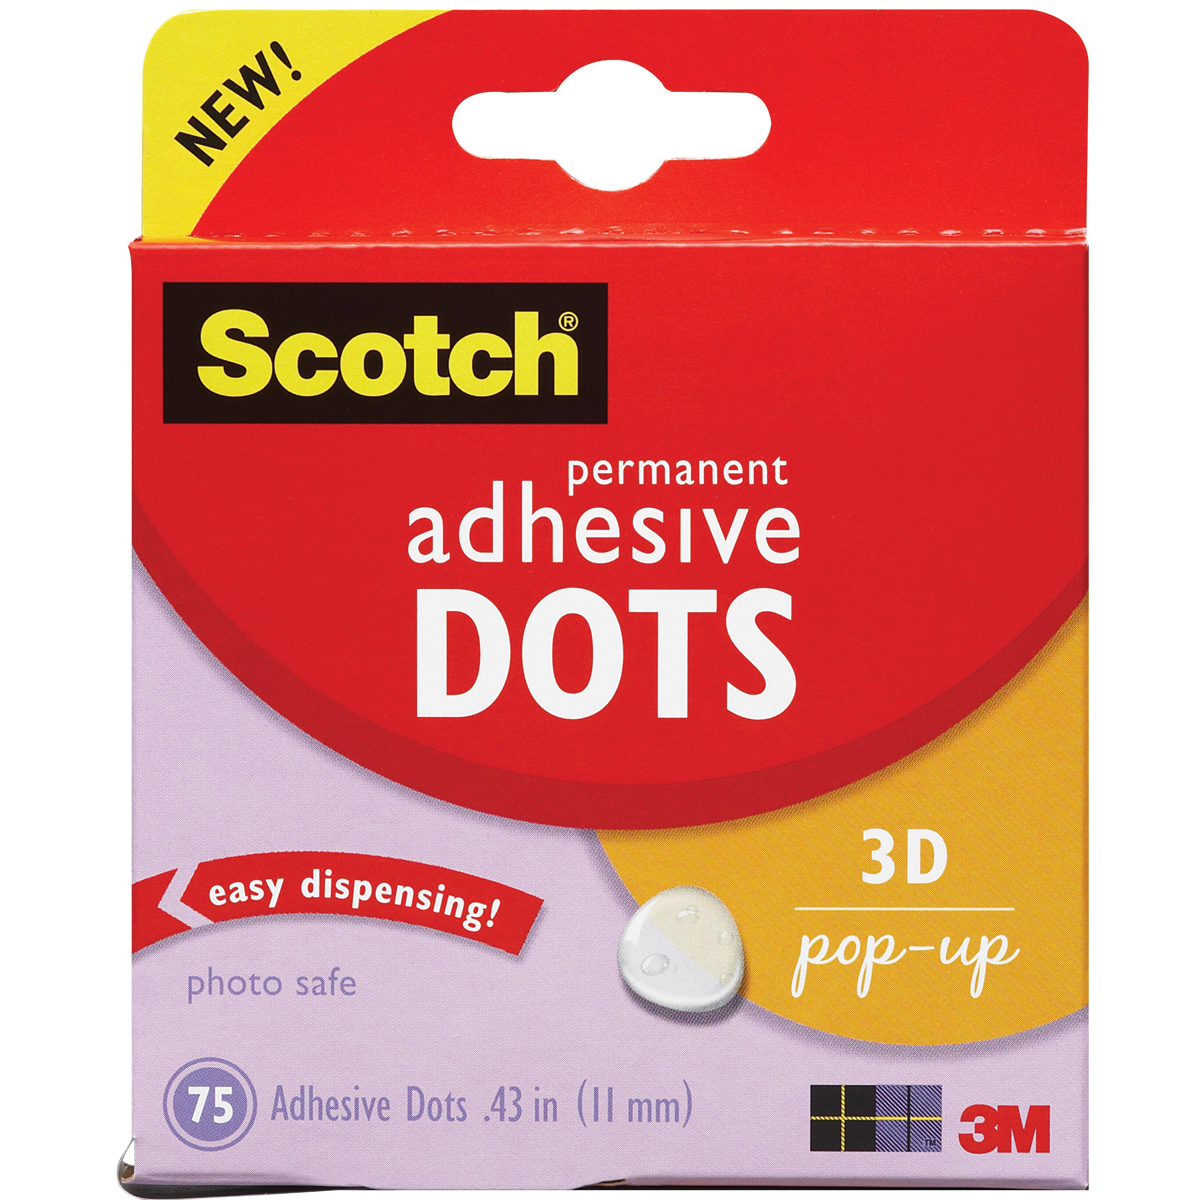 Scotch Permanent Adhesive Dots-3D Pop-Up .43" 75/Pkg - image 1 of 3